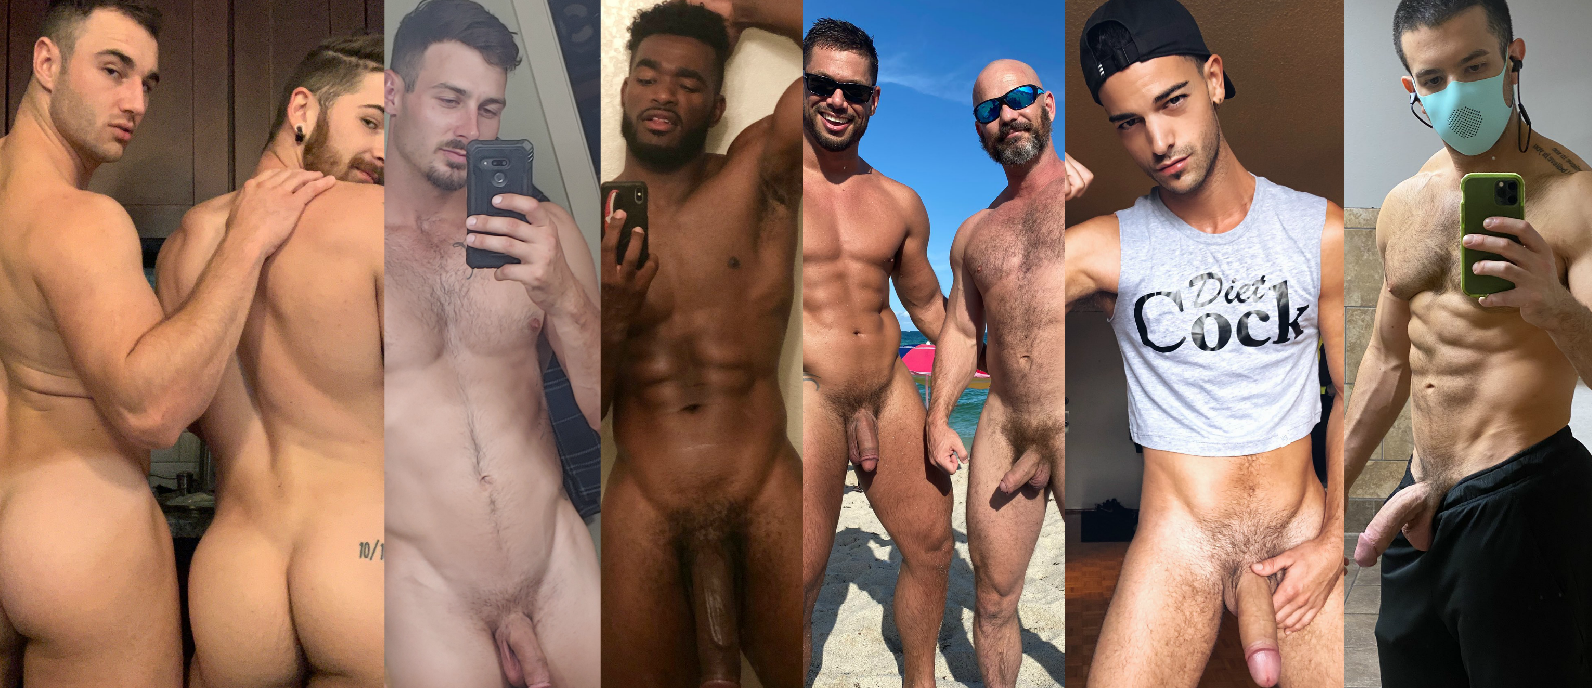 best gay porn tumblr sites